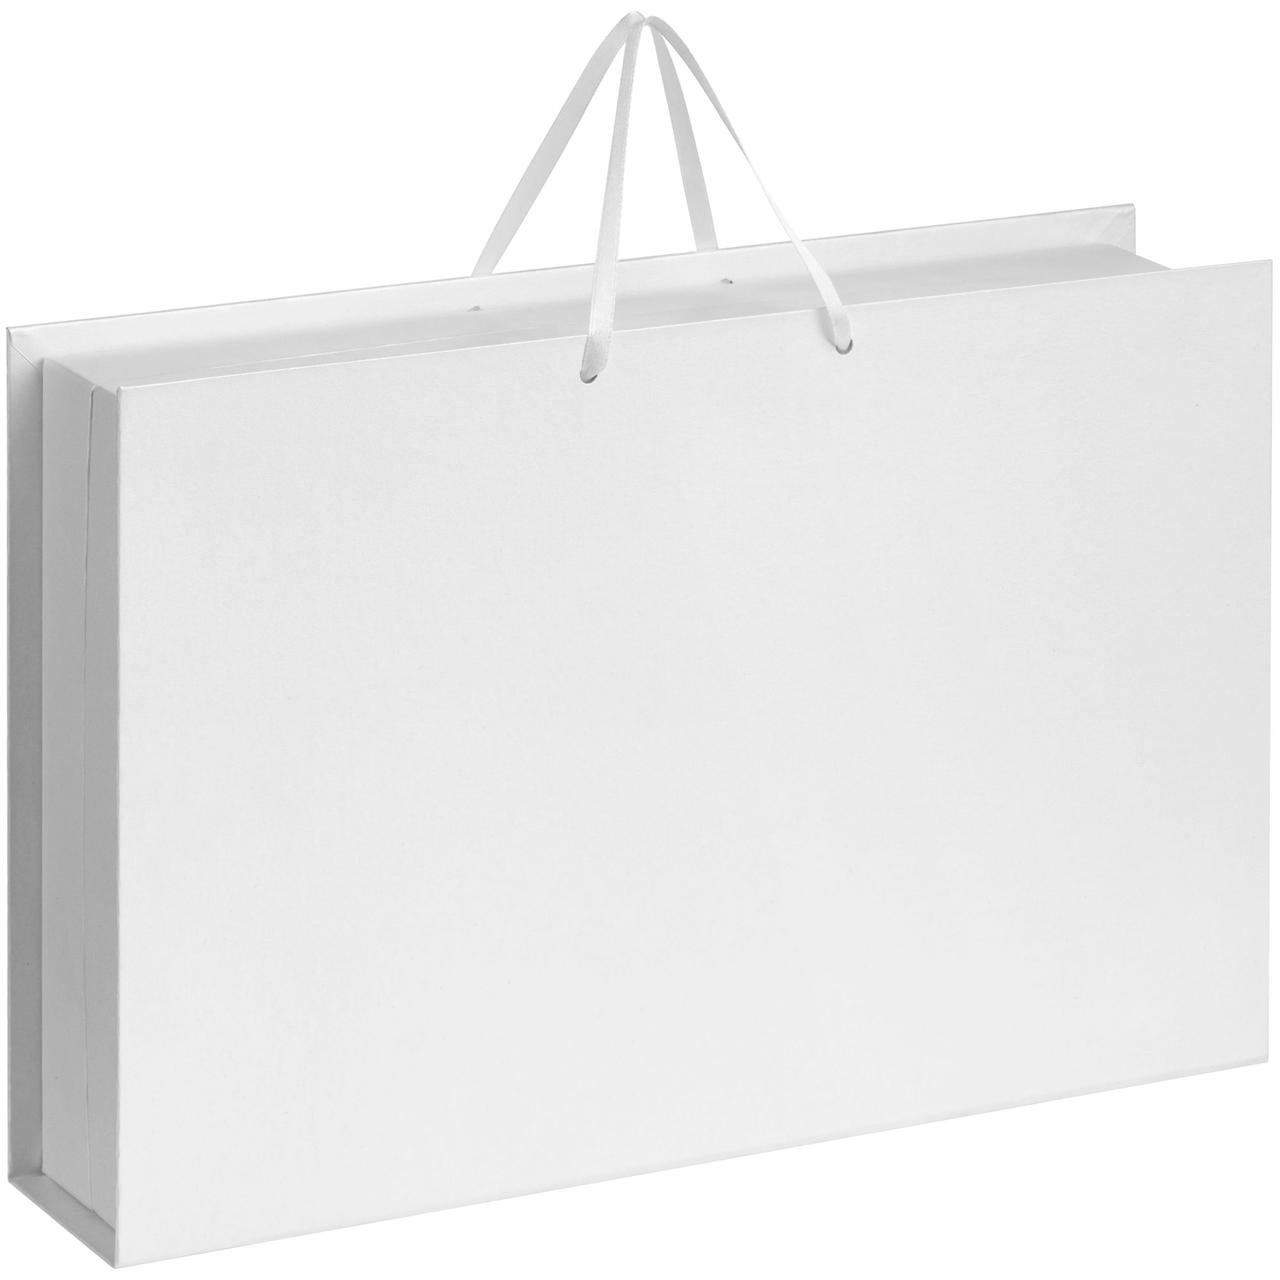 Коробка «Блеск» под набор, белая (артикул 5872.60), фото 1